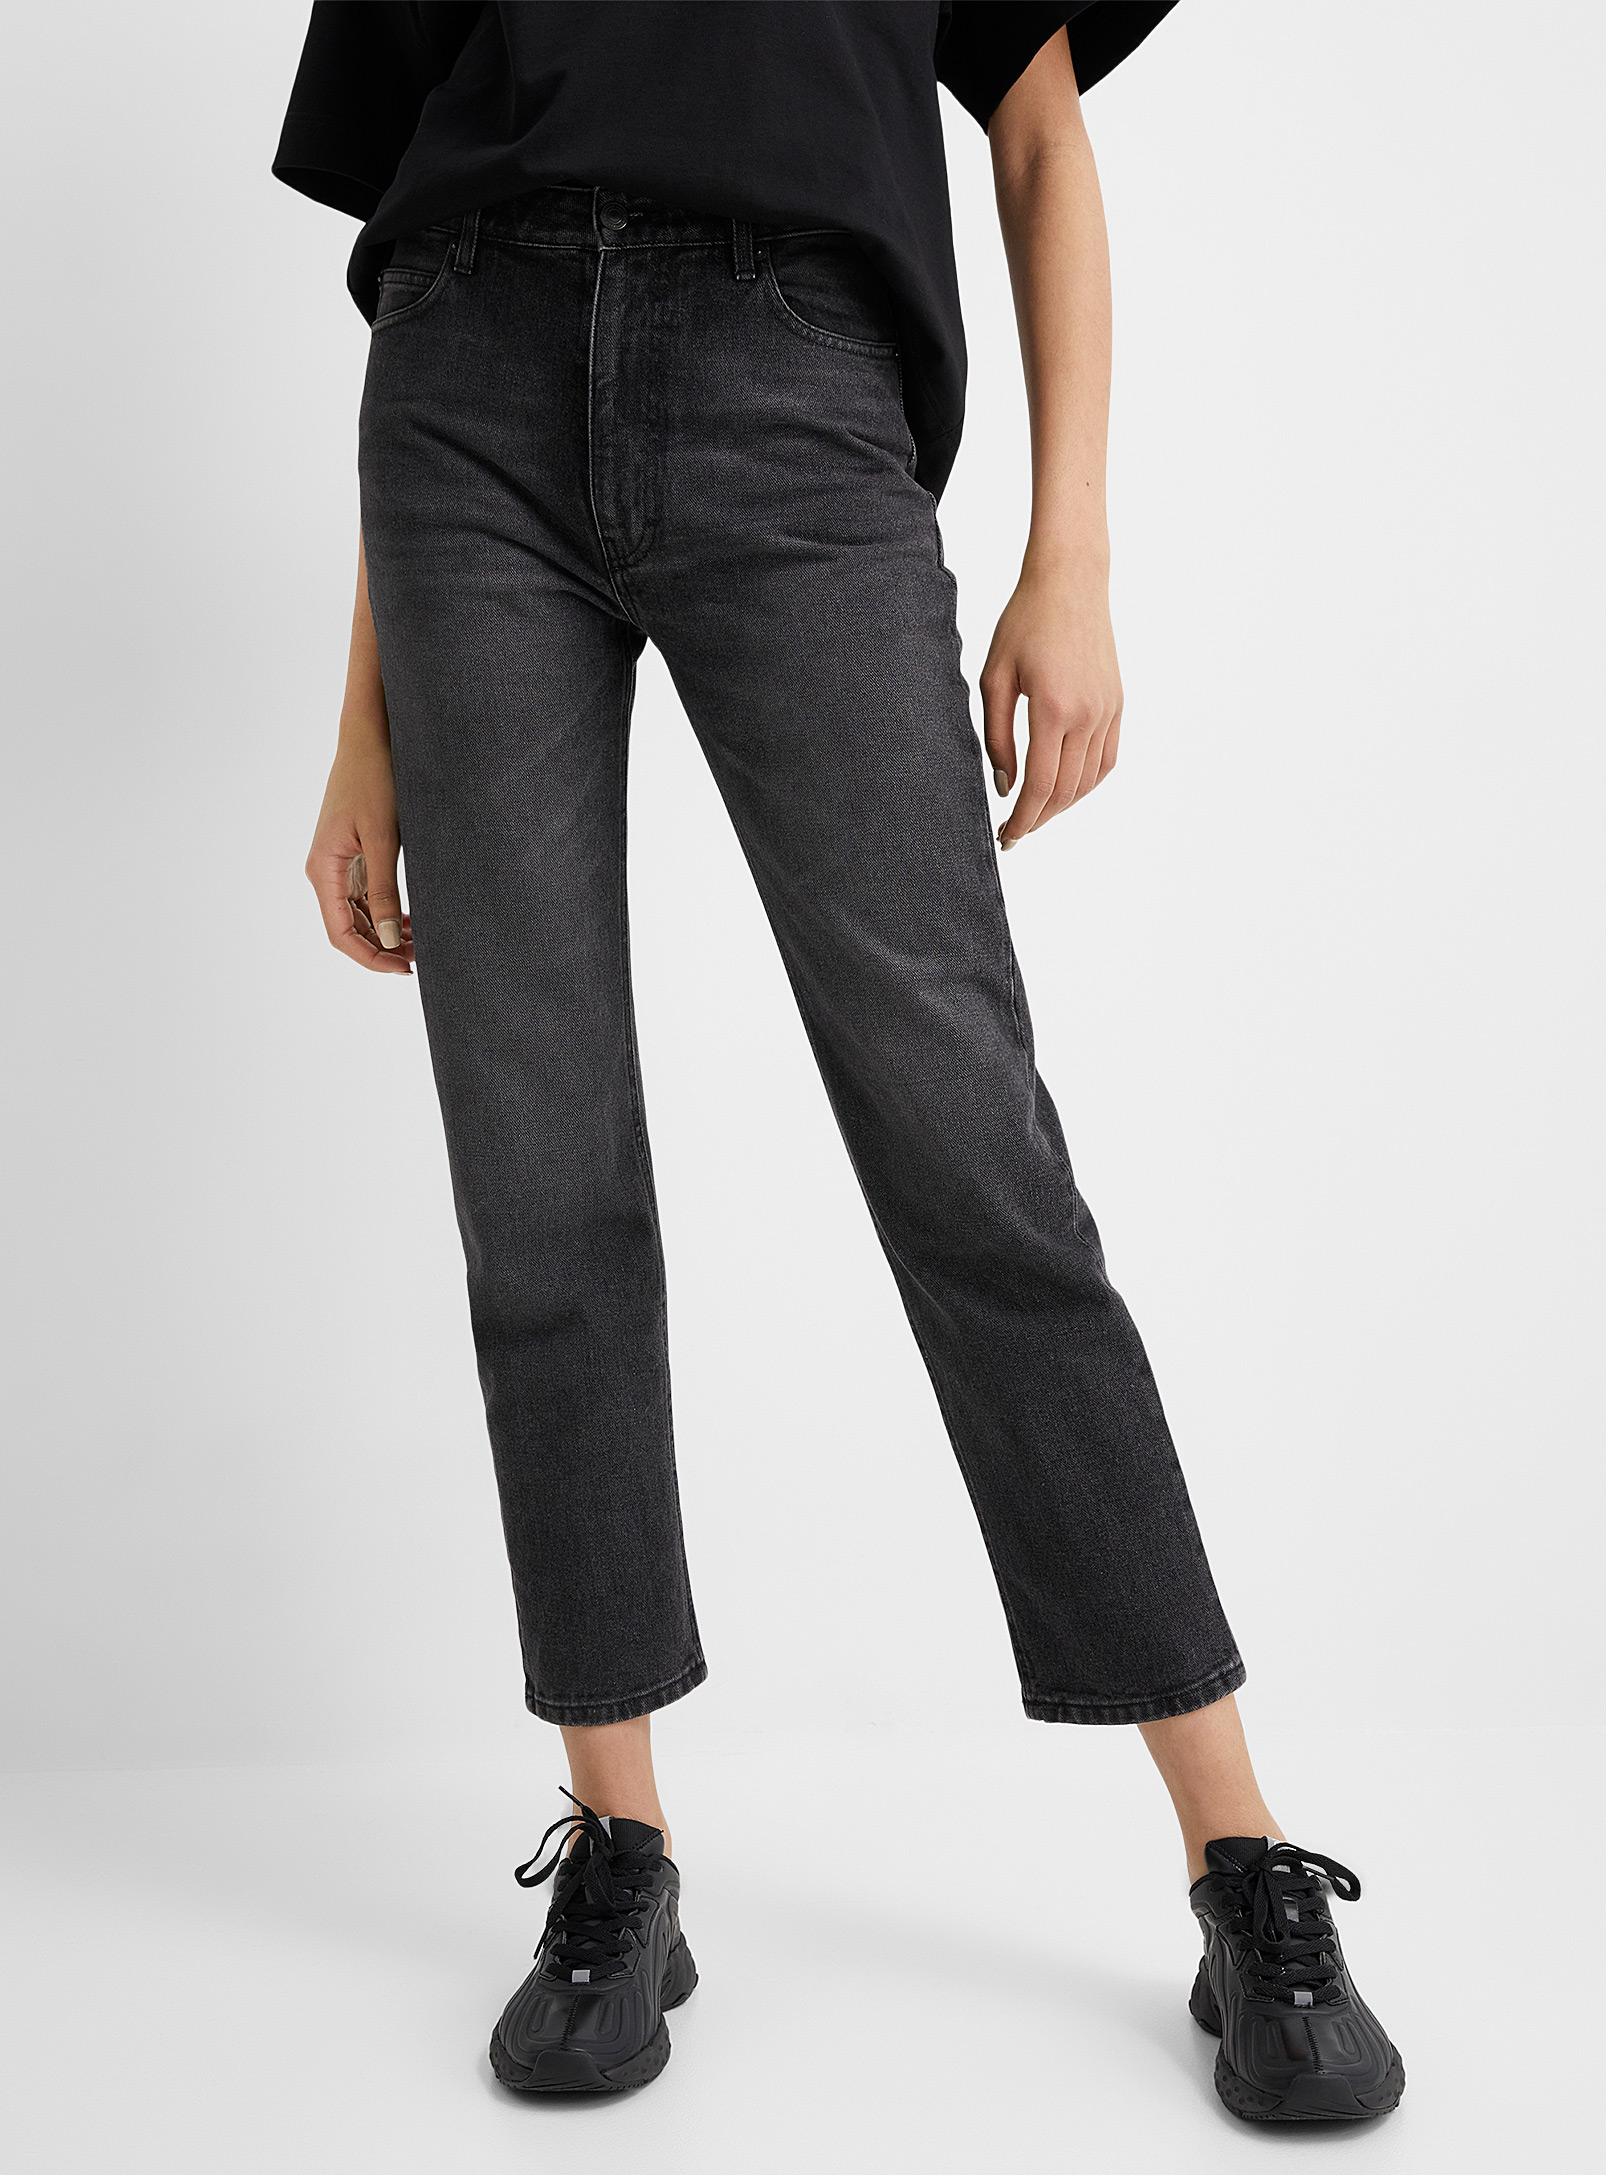 Ami - Women's Black straight-leg jeans